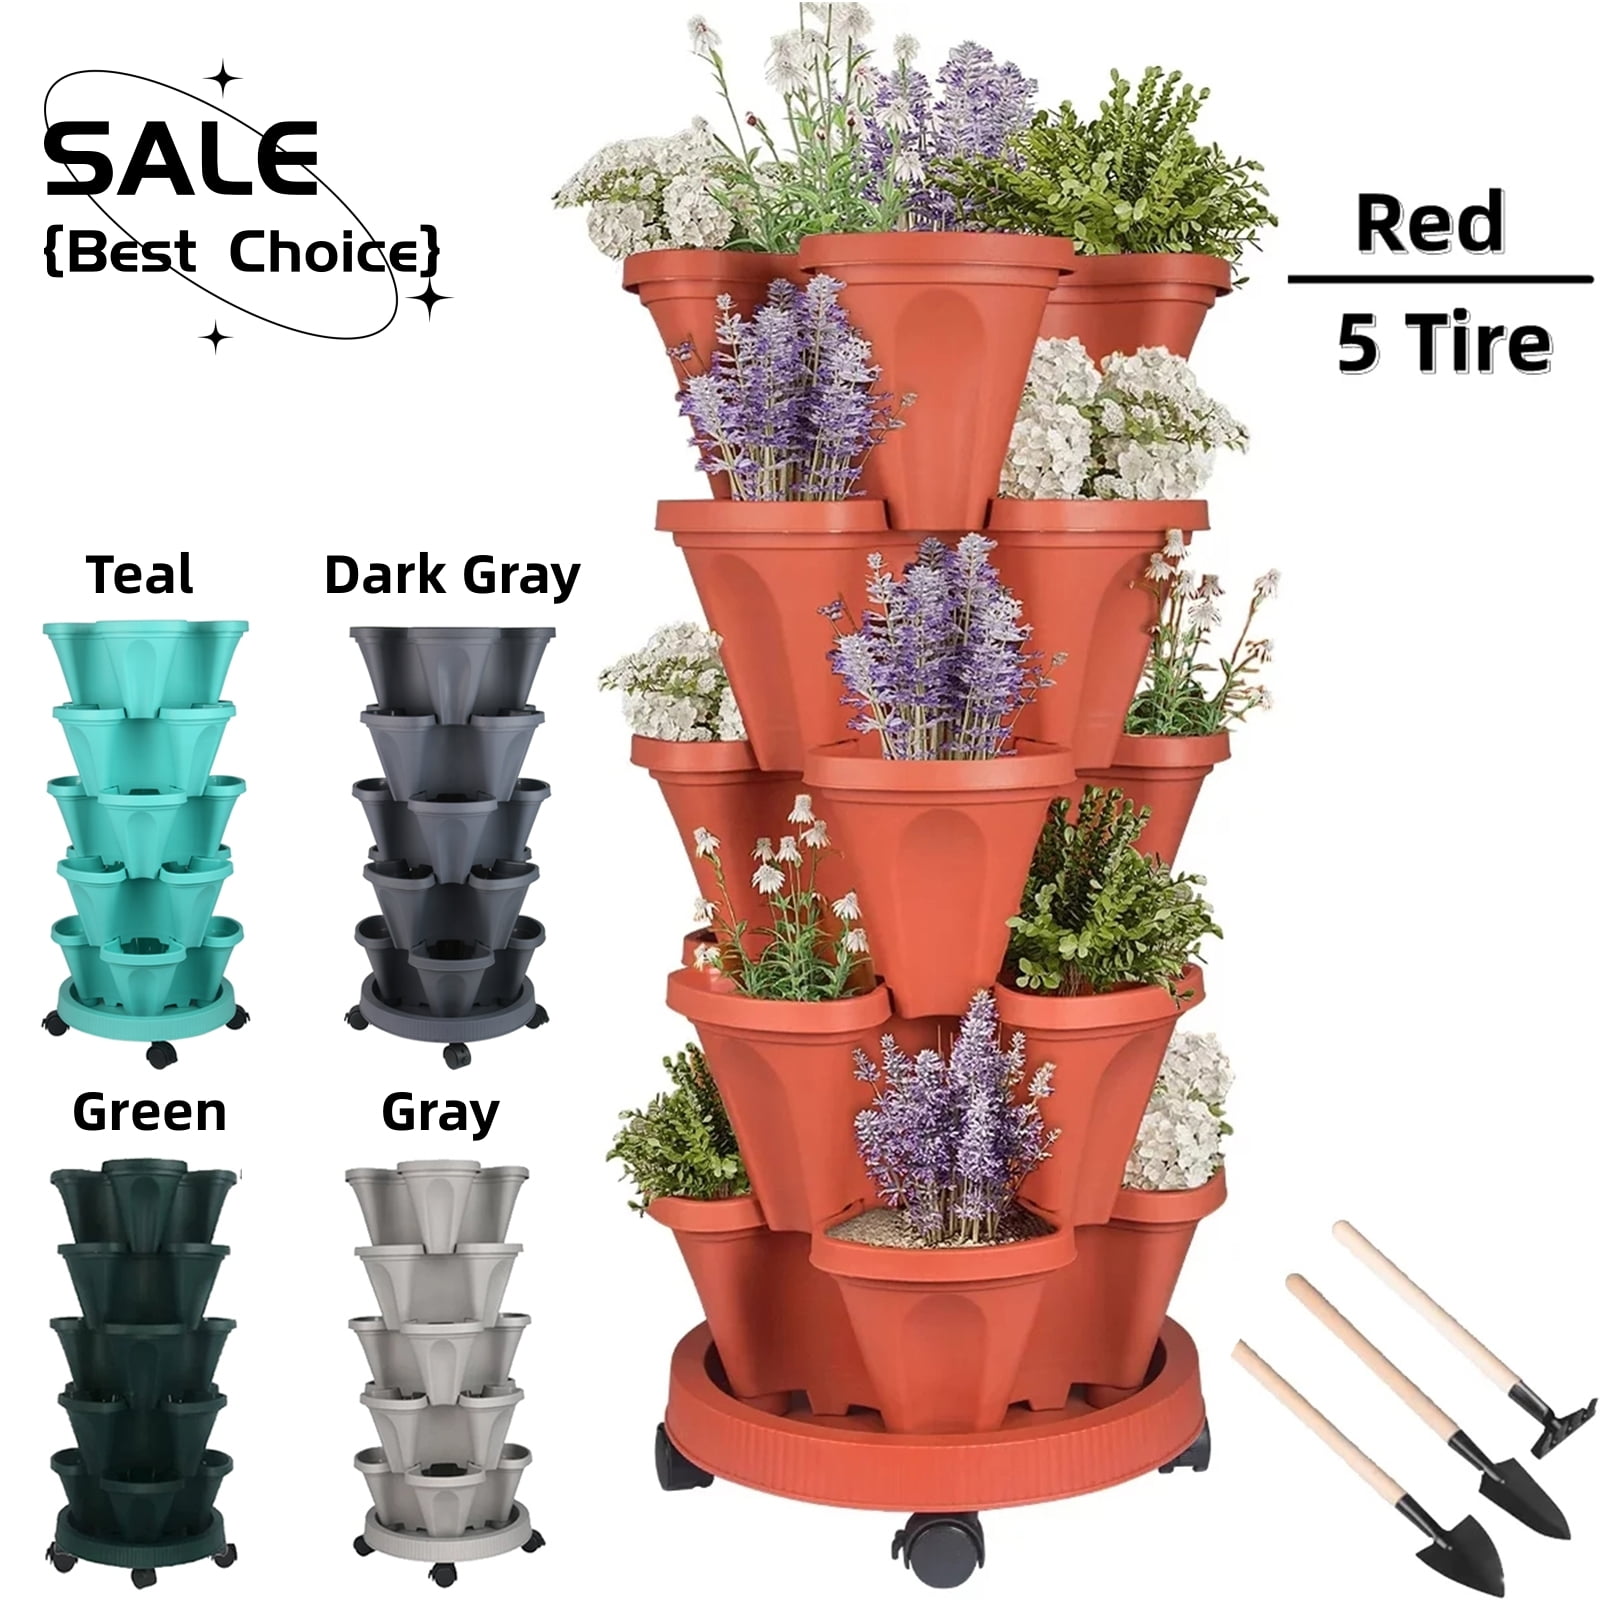 DUNCHATY Stackable Planter with Removable Wheels and Garden Tools, Tower Garden Planters, Indoor Outdoor Gardening Pots - 5 Tier